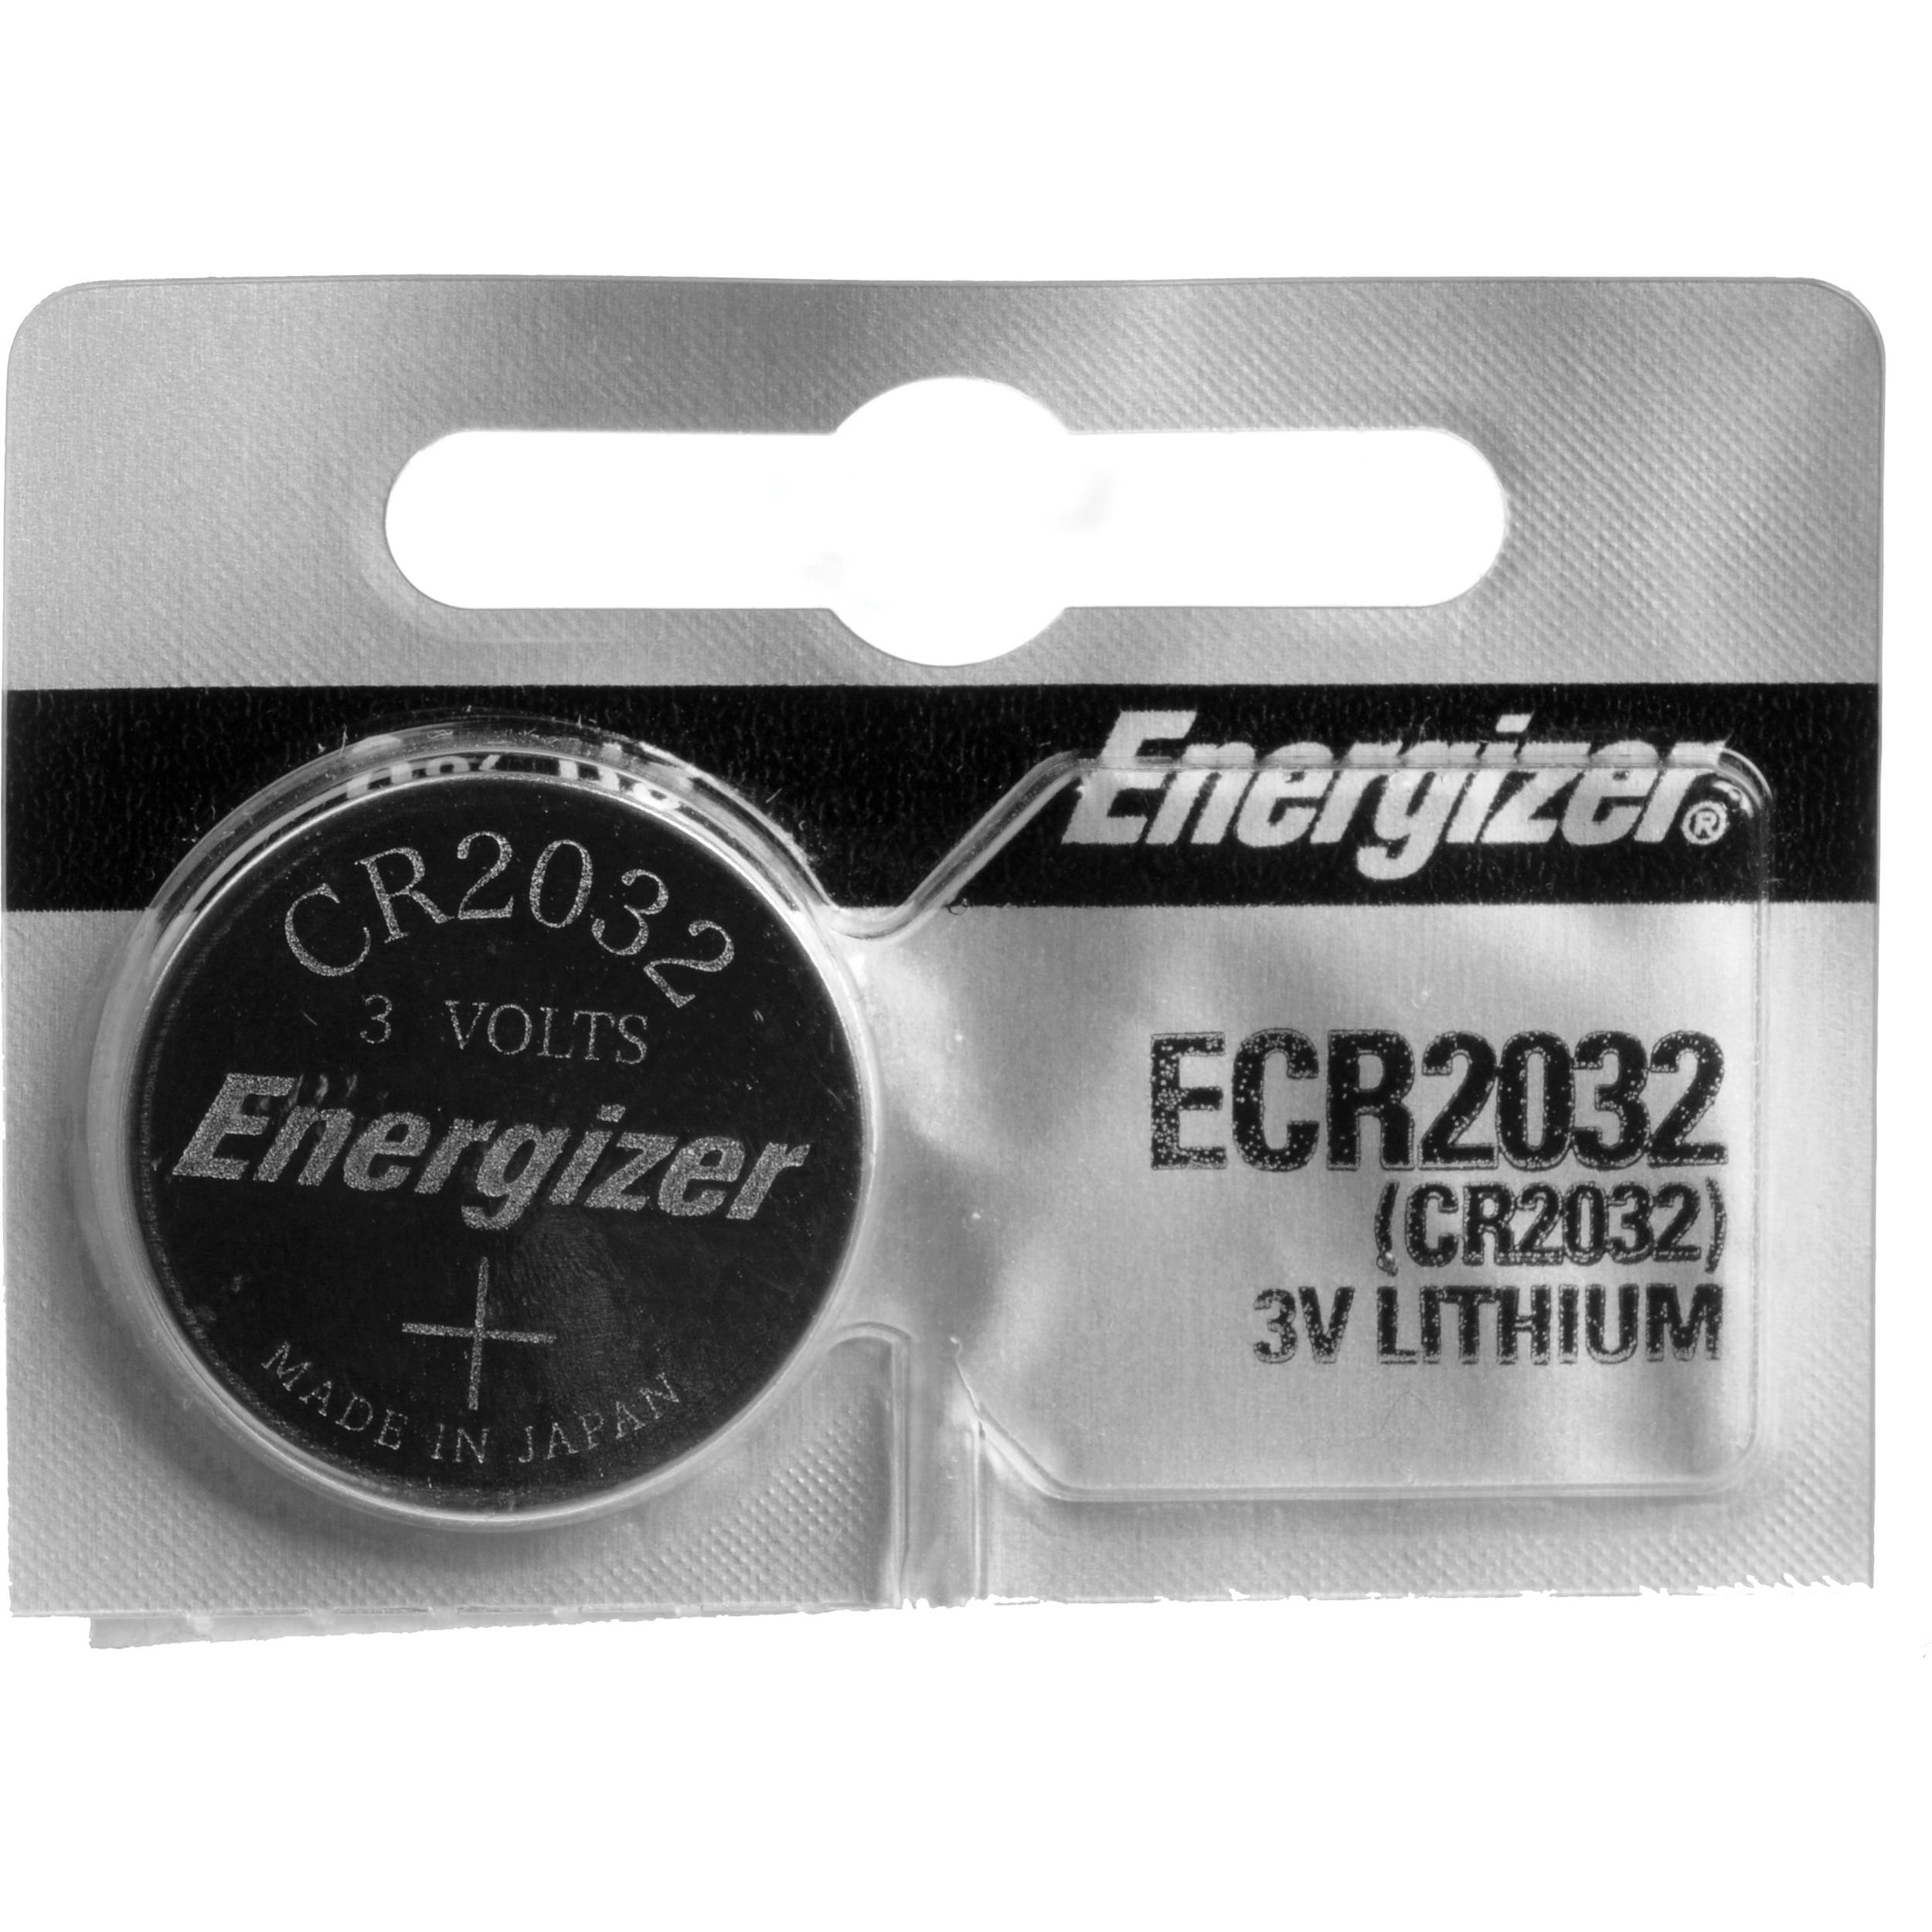 Cr2032 batteries. Литиум батарейка 2032. Батарейка cr2032 Energizer. Cr2032 батарейка Energizer Lithium. Батарейка cr2032 (3v).